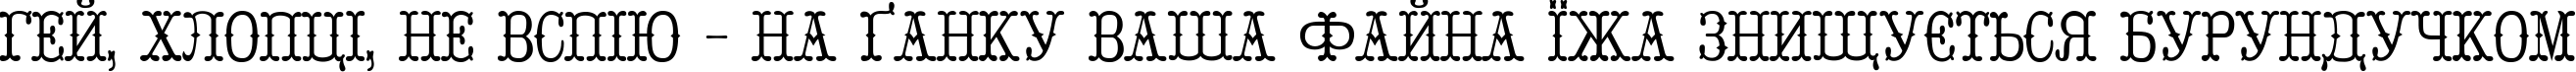 Пример написания шрифтом Parizhel текста на украинском